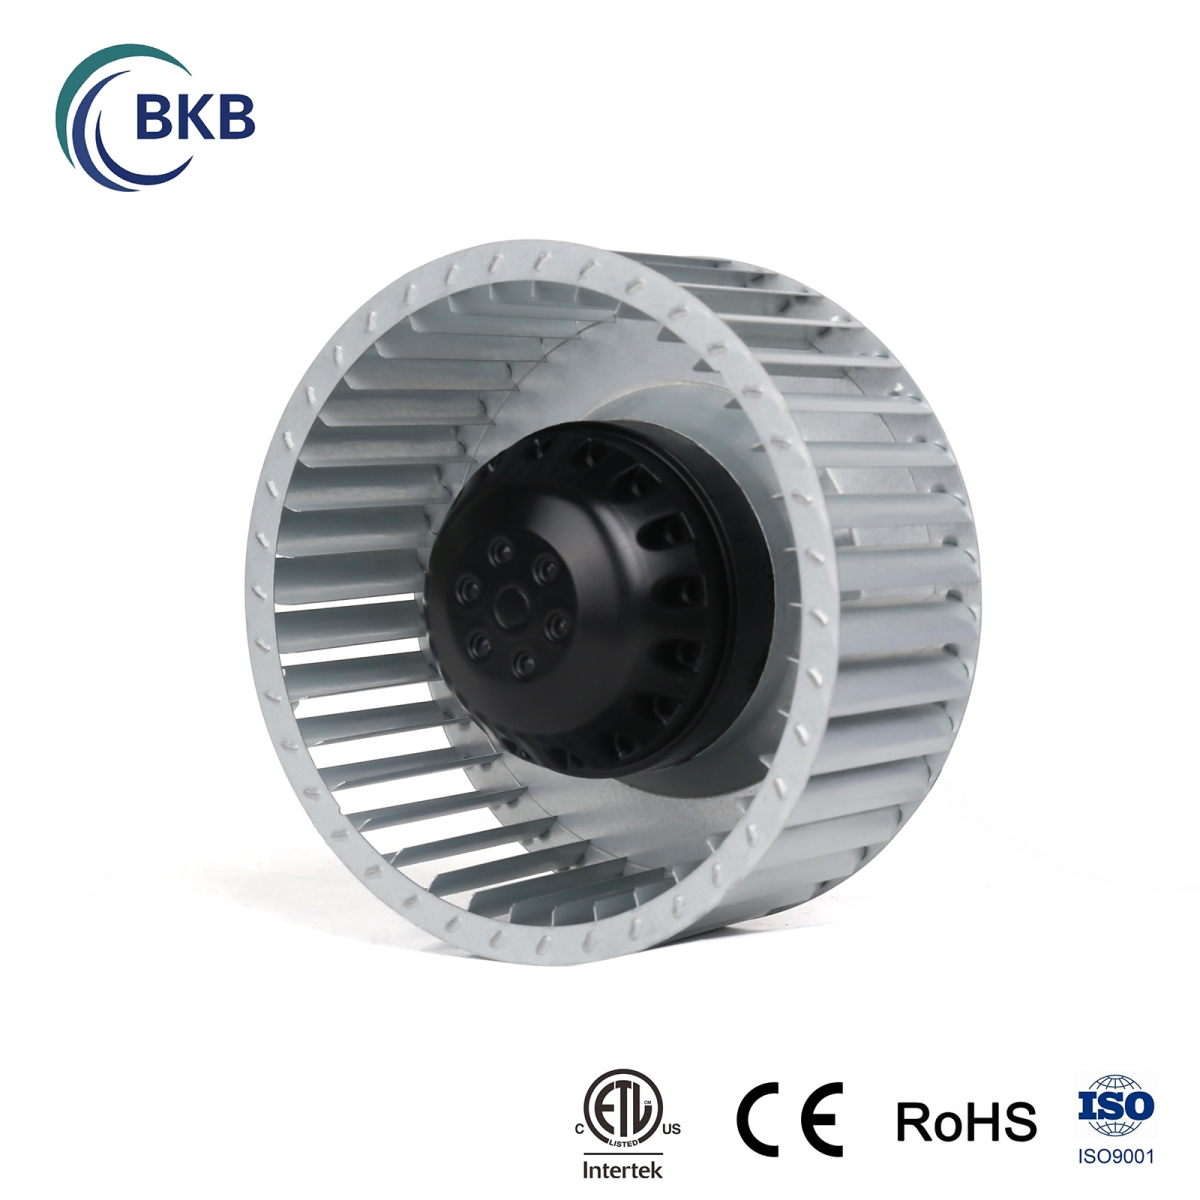 The main parts of a centrifugal fan.-SUNLIGHT BLOWER,Centrifugal Fans, Inline Fans,Motors,Backward curved centrifugal fans ,Forward curved centrifugal fans ,inlet fans, EC fans